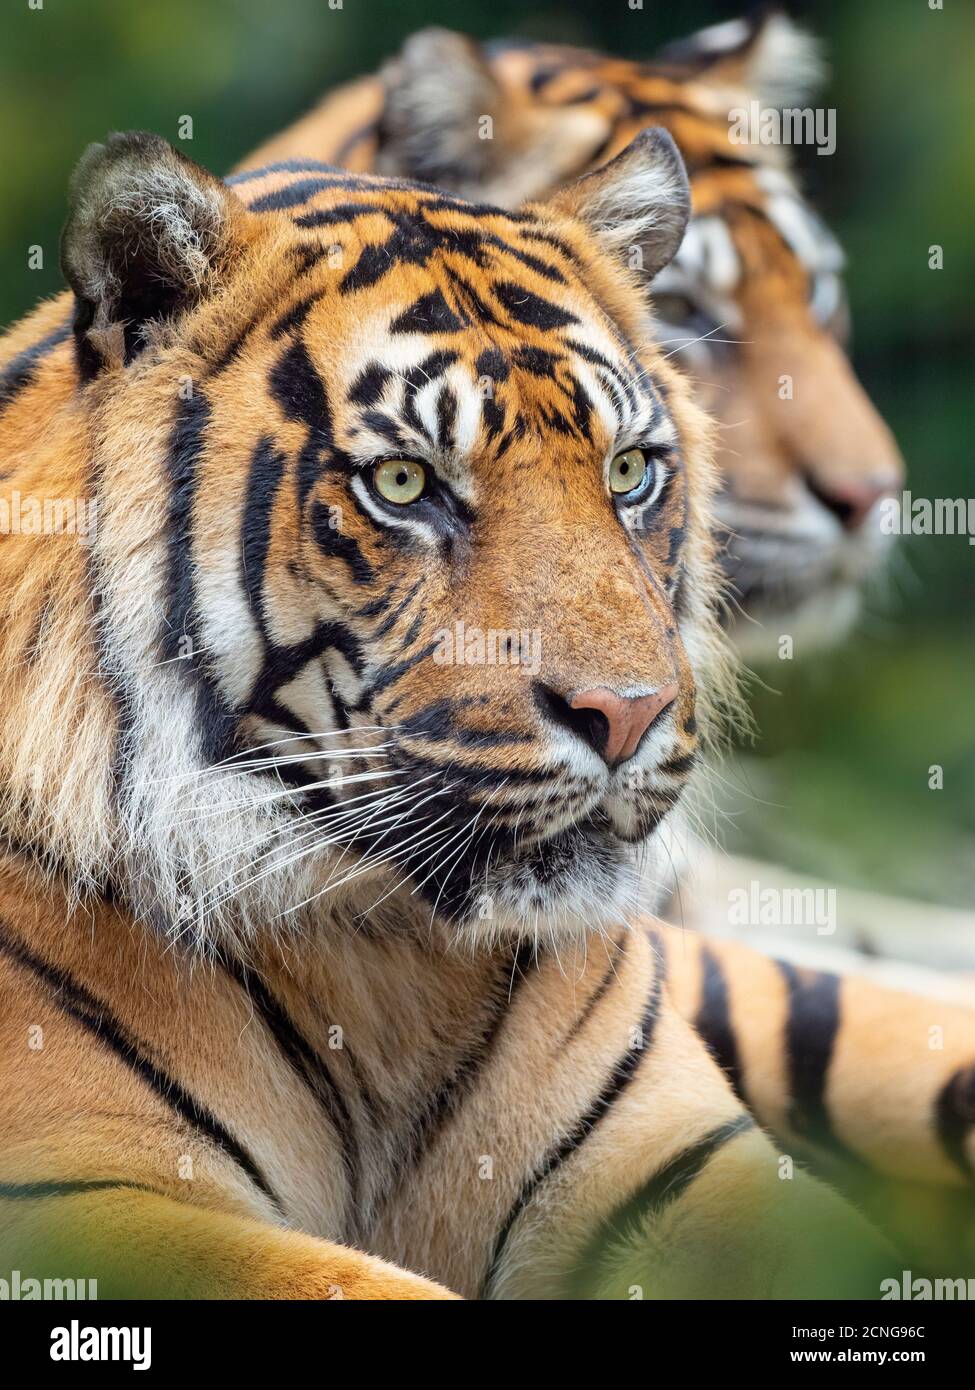 Tigre de Sumatra Panthera tigris sondaica cautivo Foto de stock